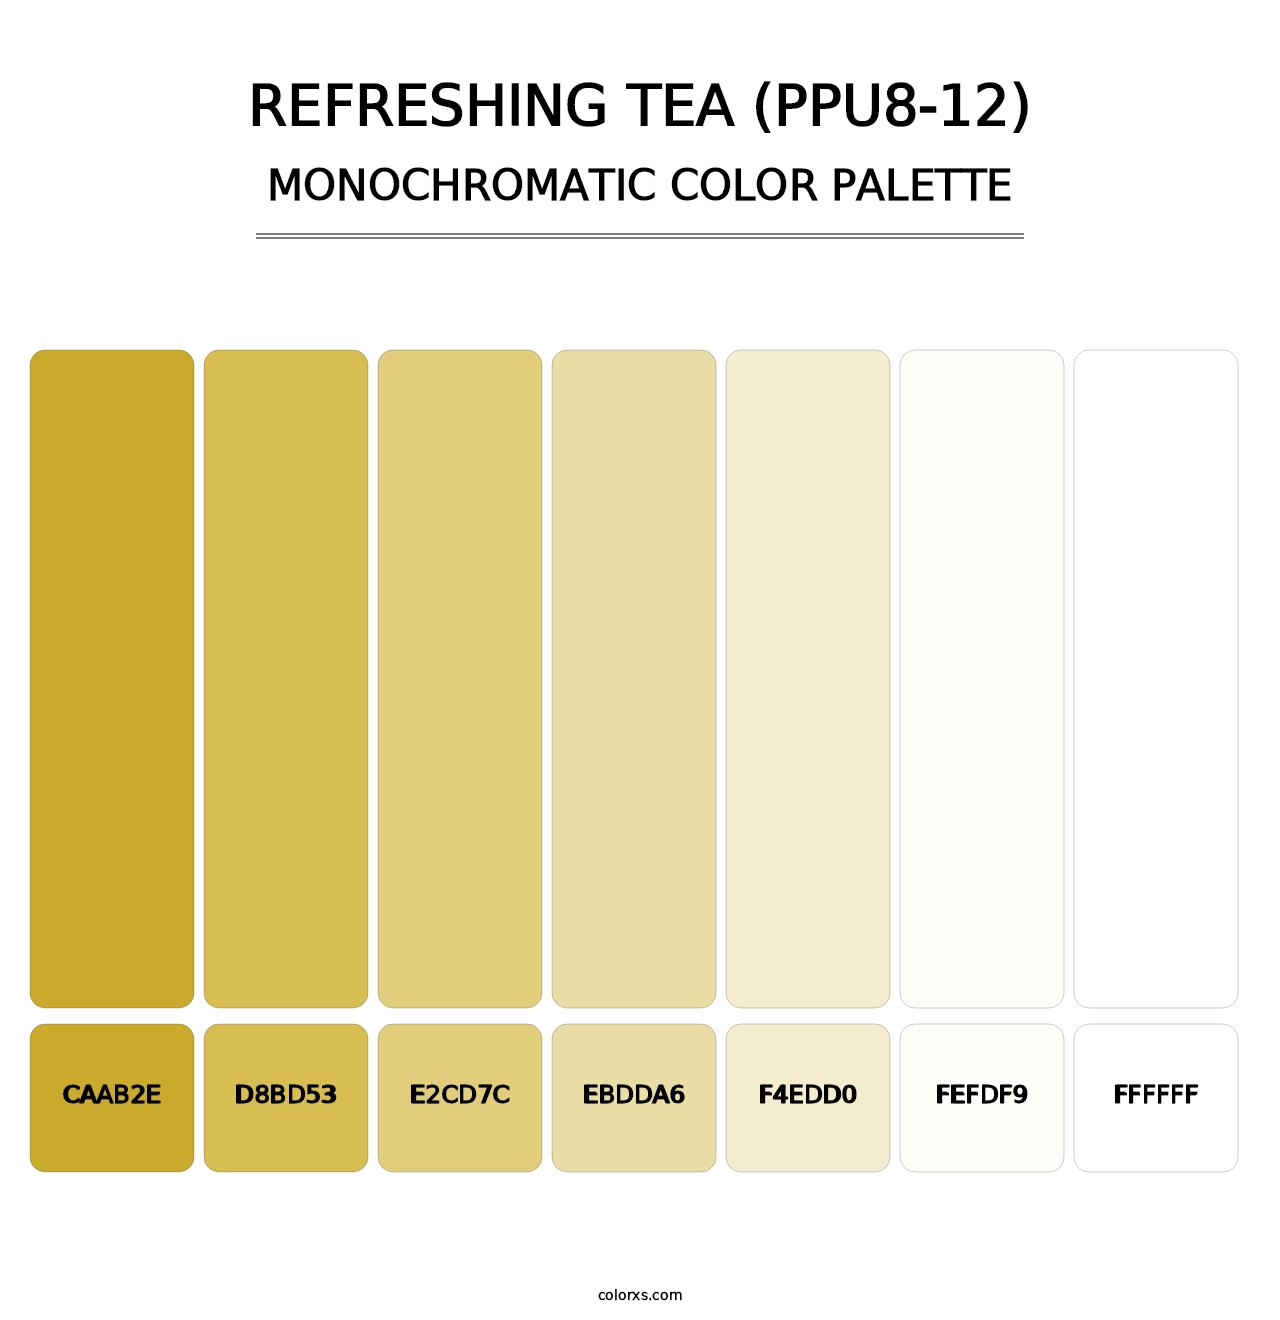 Refreshing Tea (PPU8-12) - Monochromatic Color Palette